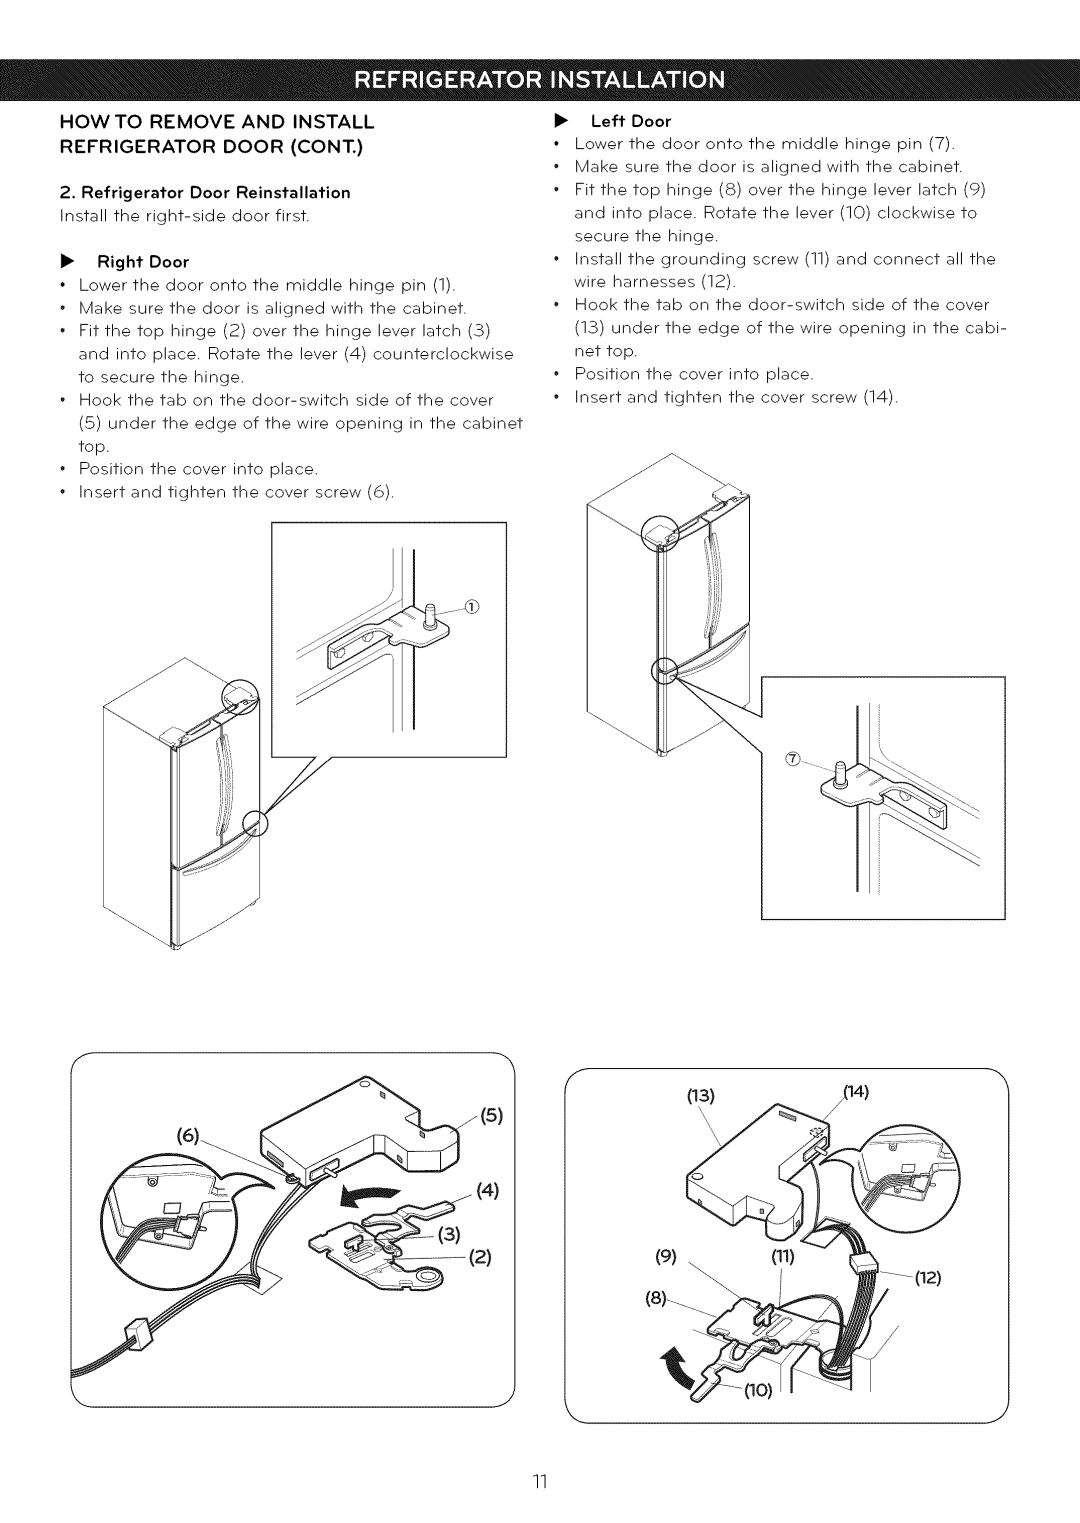 LG Electronics LFC25765 manual Howtoremoveandinstall Refrigeratordoorcont, Refrigerator Door Reinstallation 